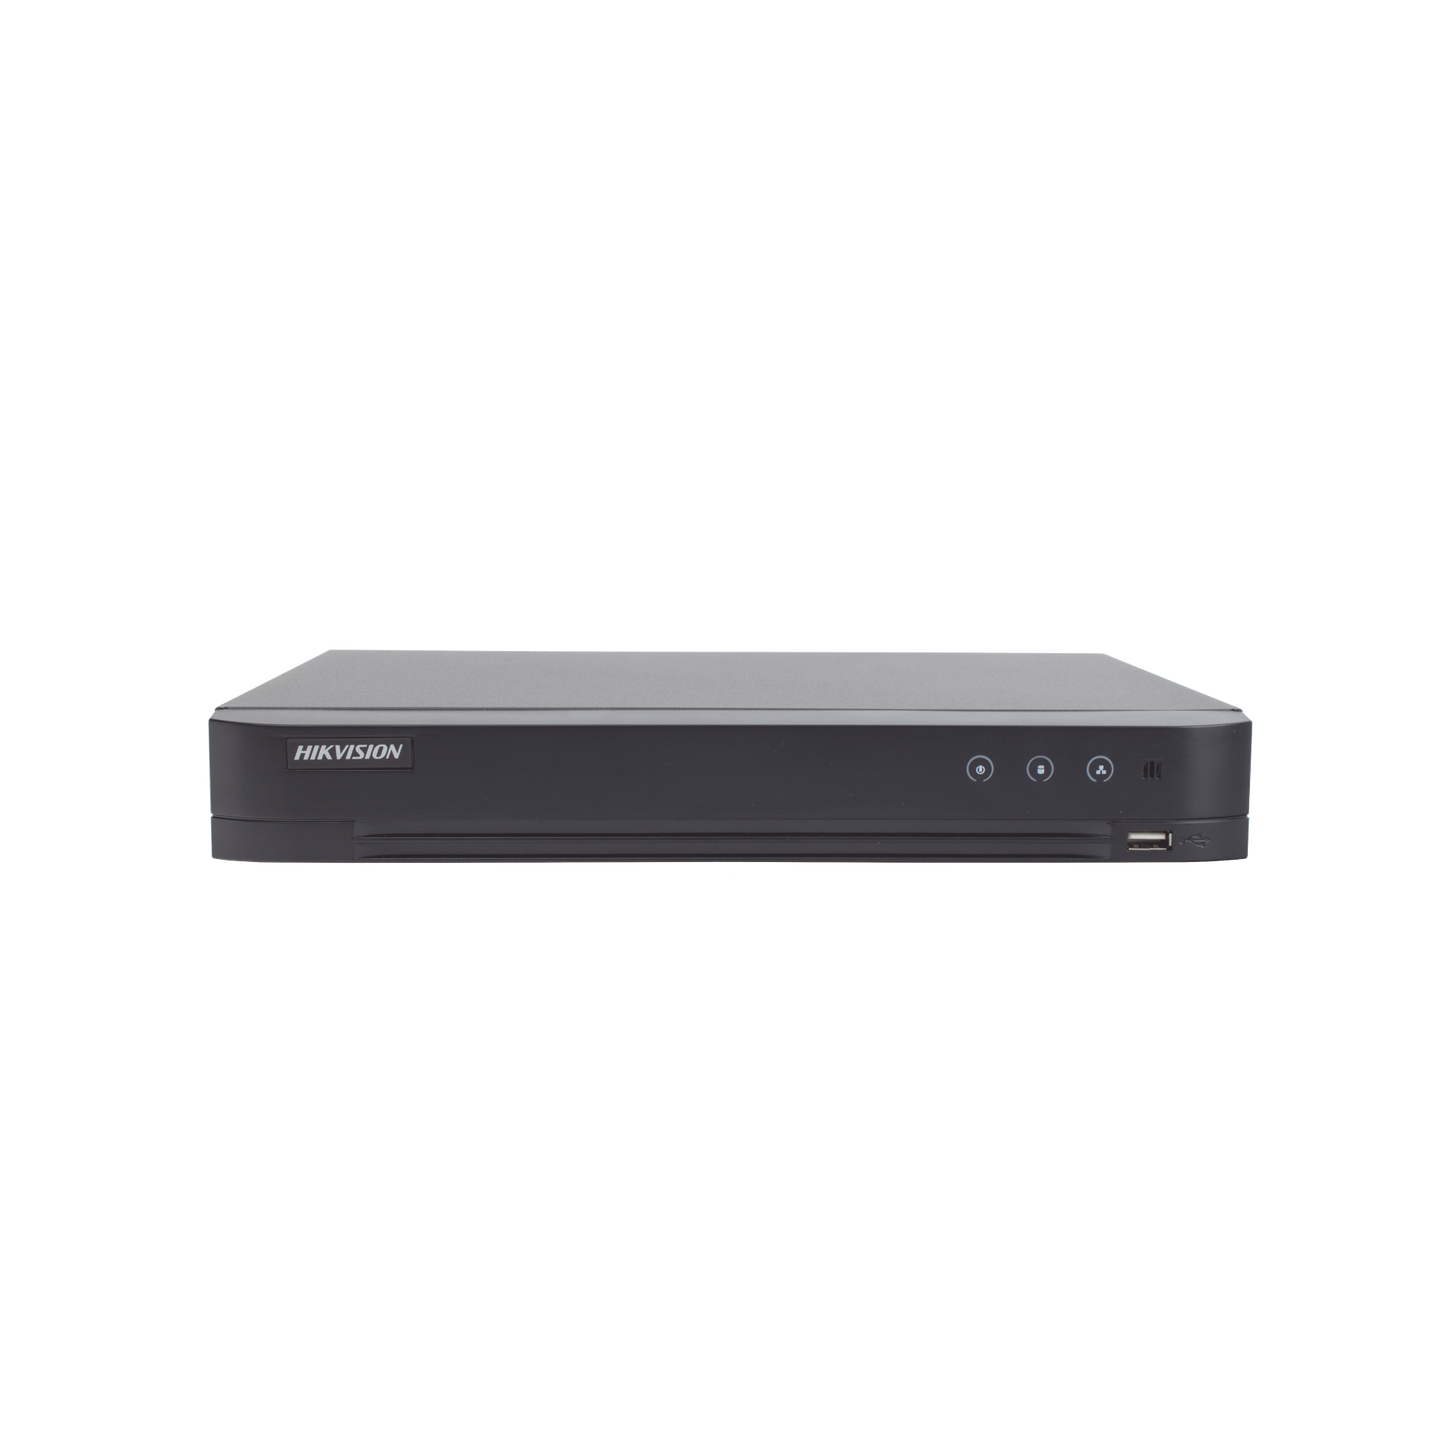 DVR 4 Canales TurboHD + 2 Canales IP / 5 Megapixel Lite - 3K Lite / Acusense (Evista falsas alarmas) / Audio por Coaxitron / 1 Bahía de Disco Duro / Salida de Video en Full HD